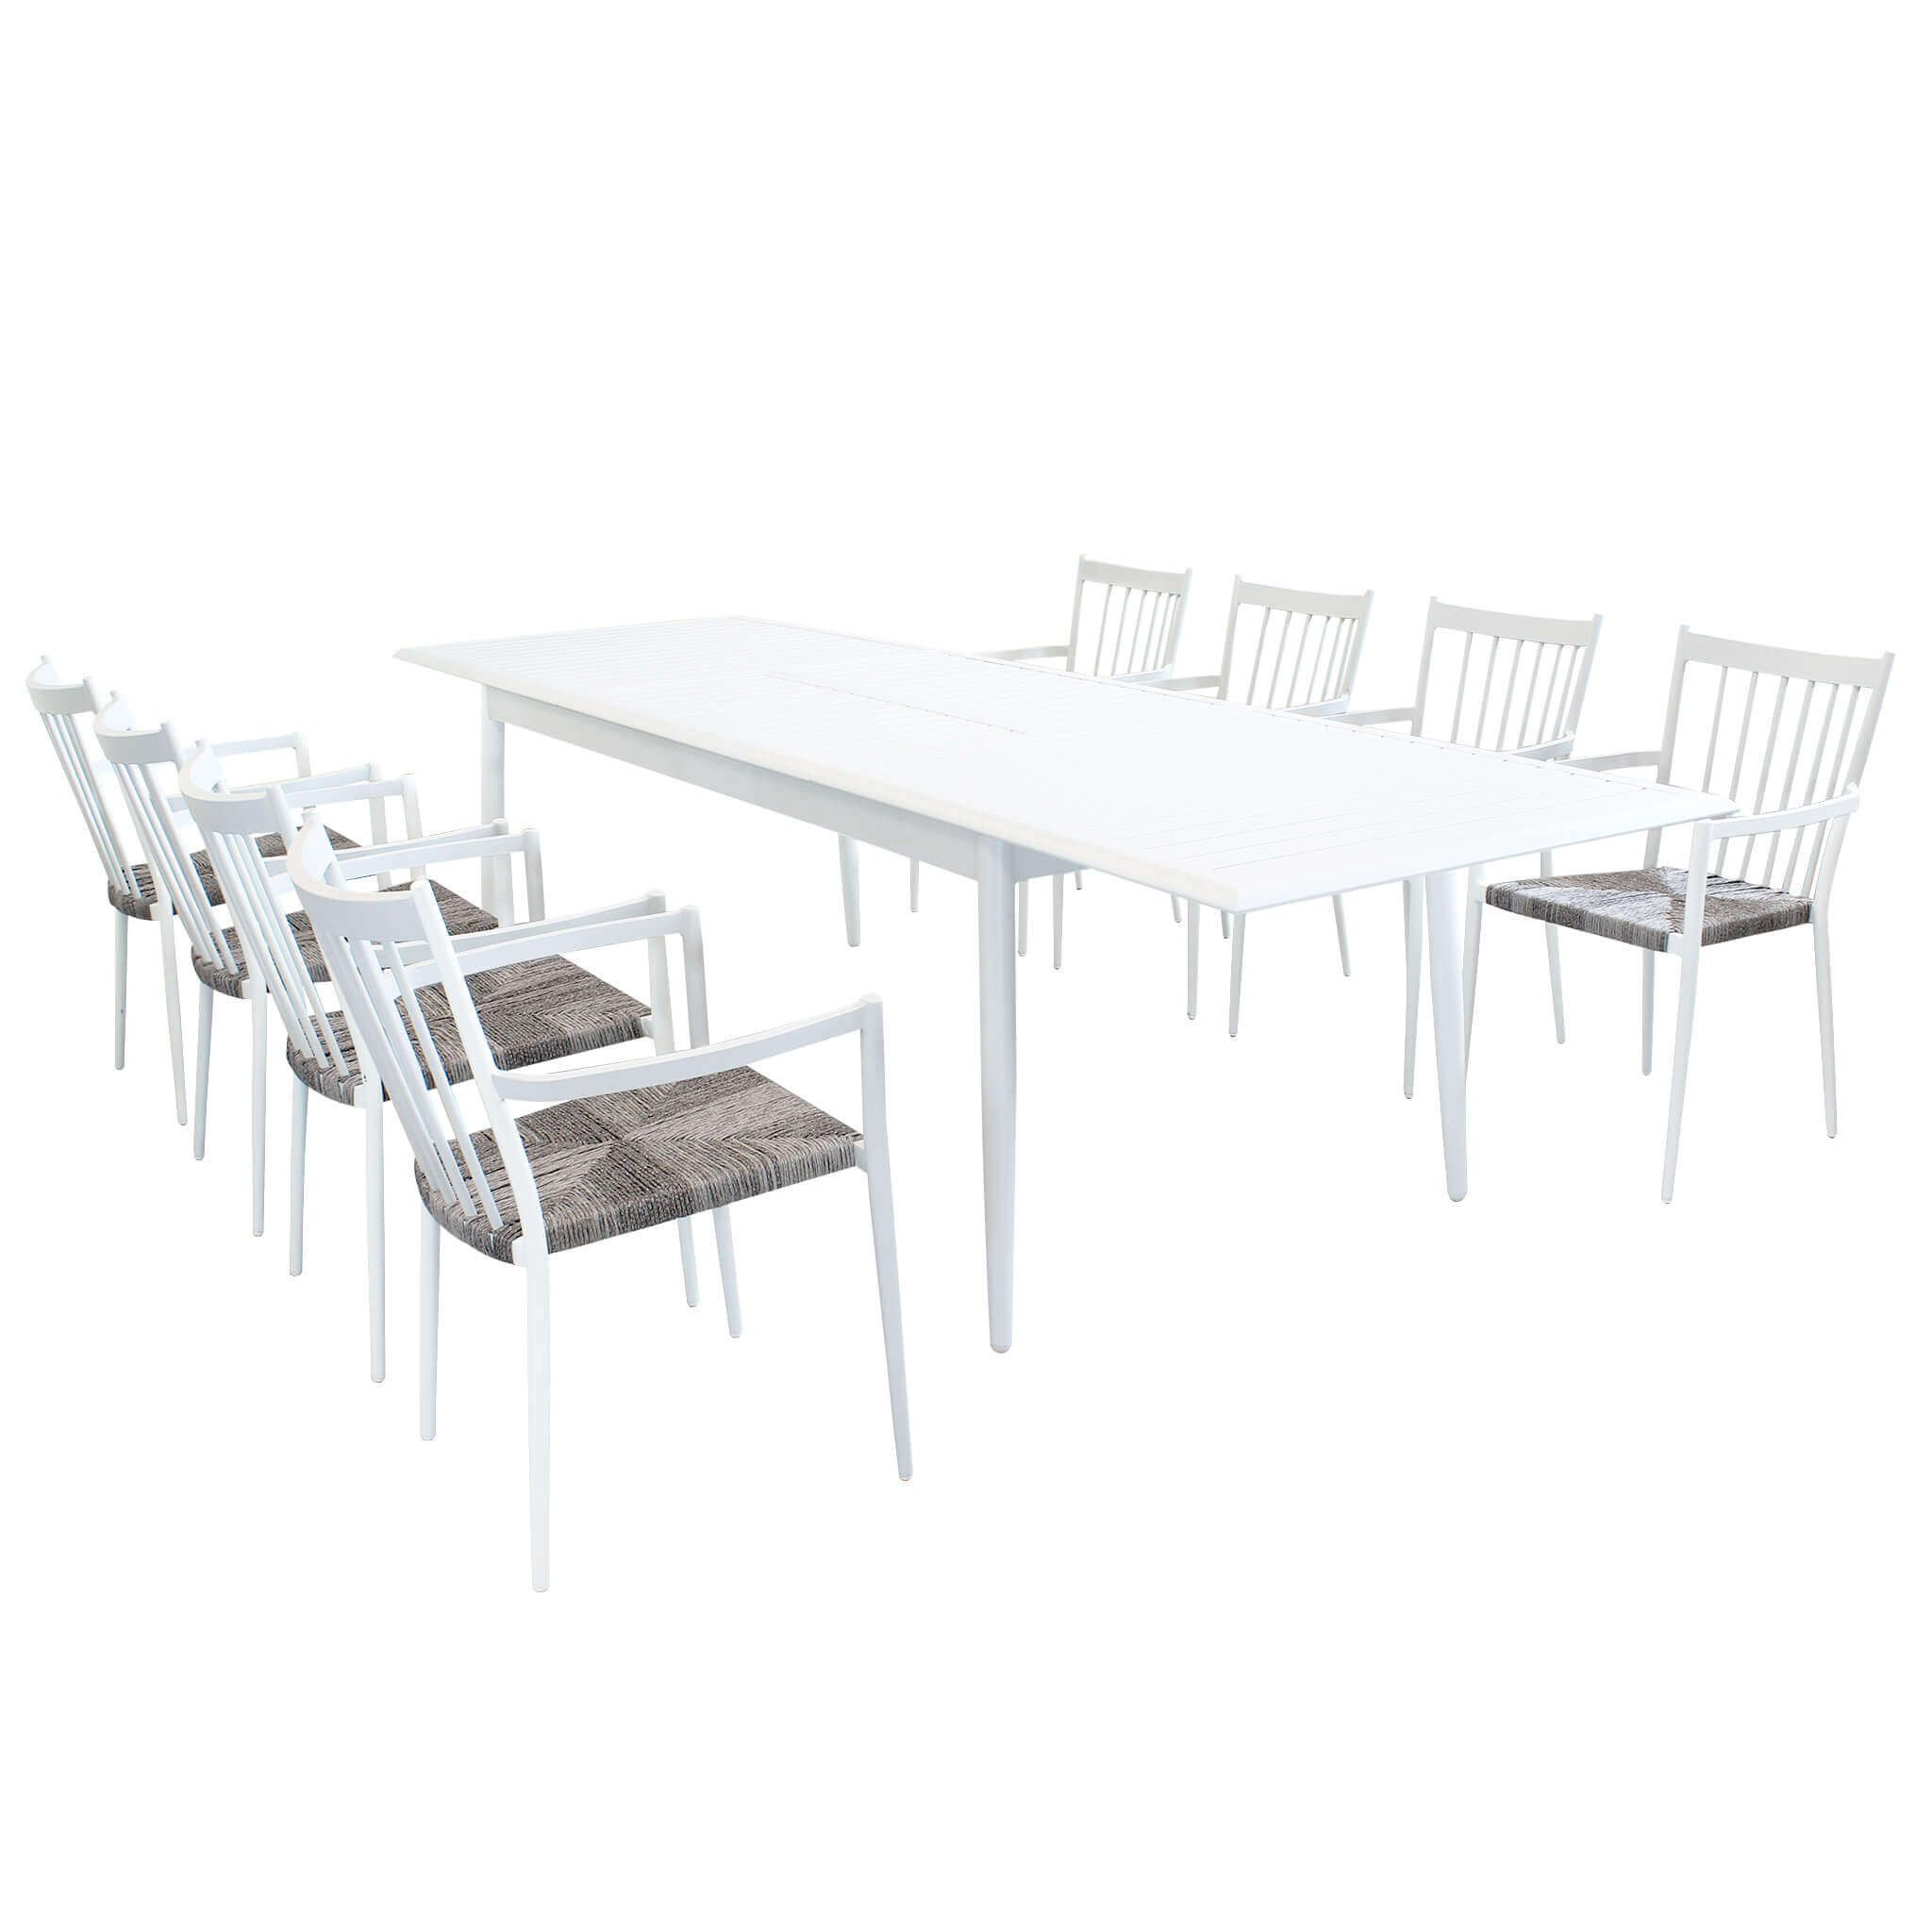 Milani Home IMPERIUM - set tavolo in alluminio cm 200/300 x 90 x 76 h con 8 sedute